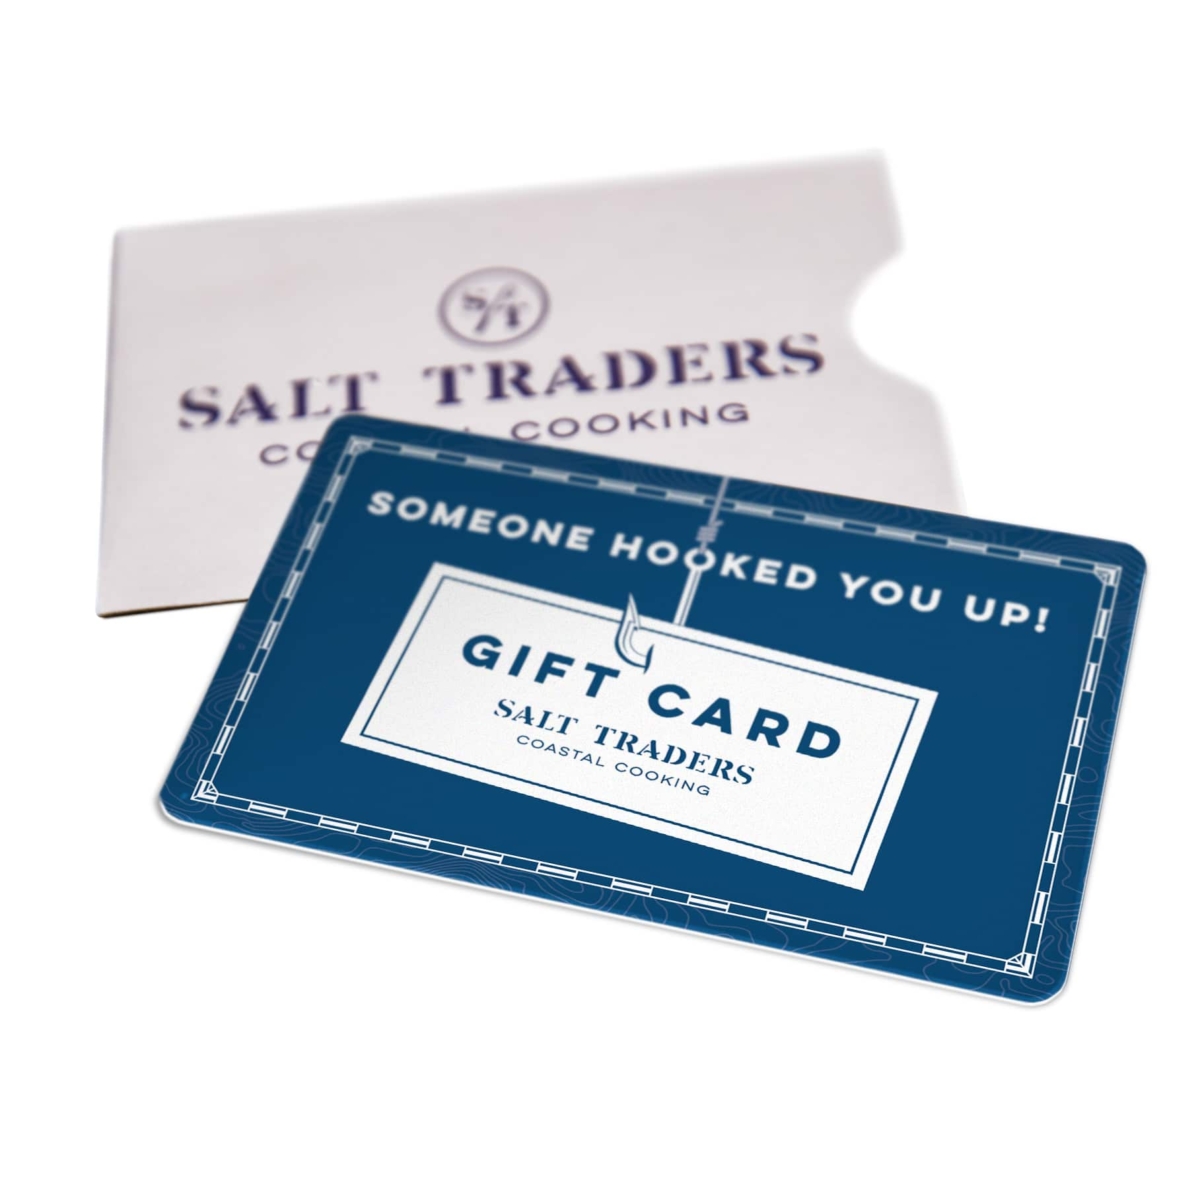 Salt Traders Gift Card